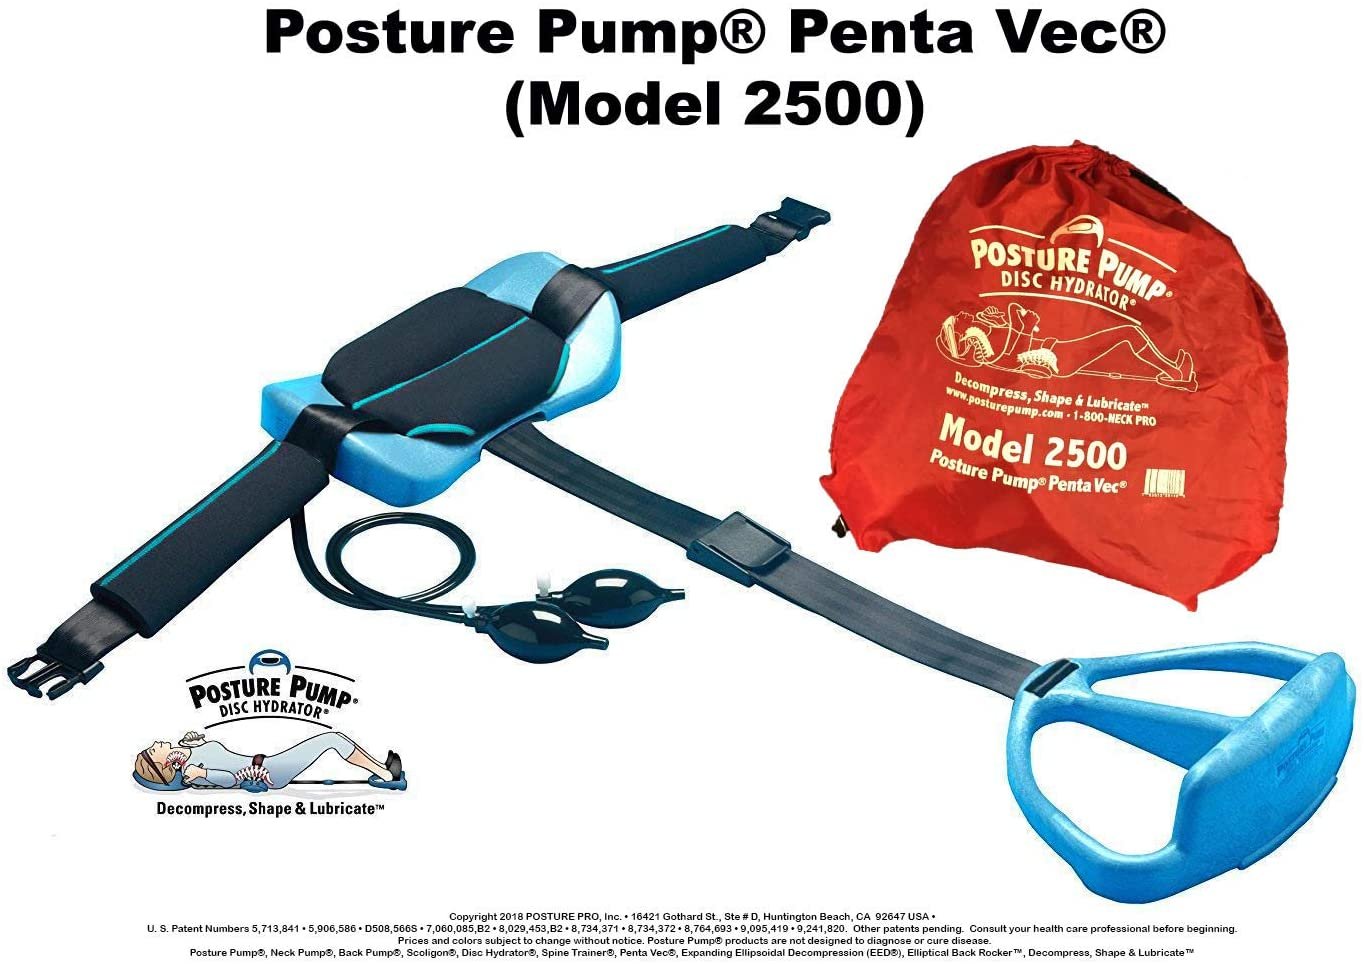 Posture Pump® Relief for Sciatica and Low Back Pain - Penta Vec® Model 2500